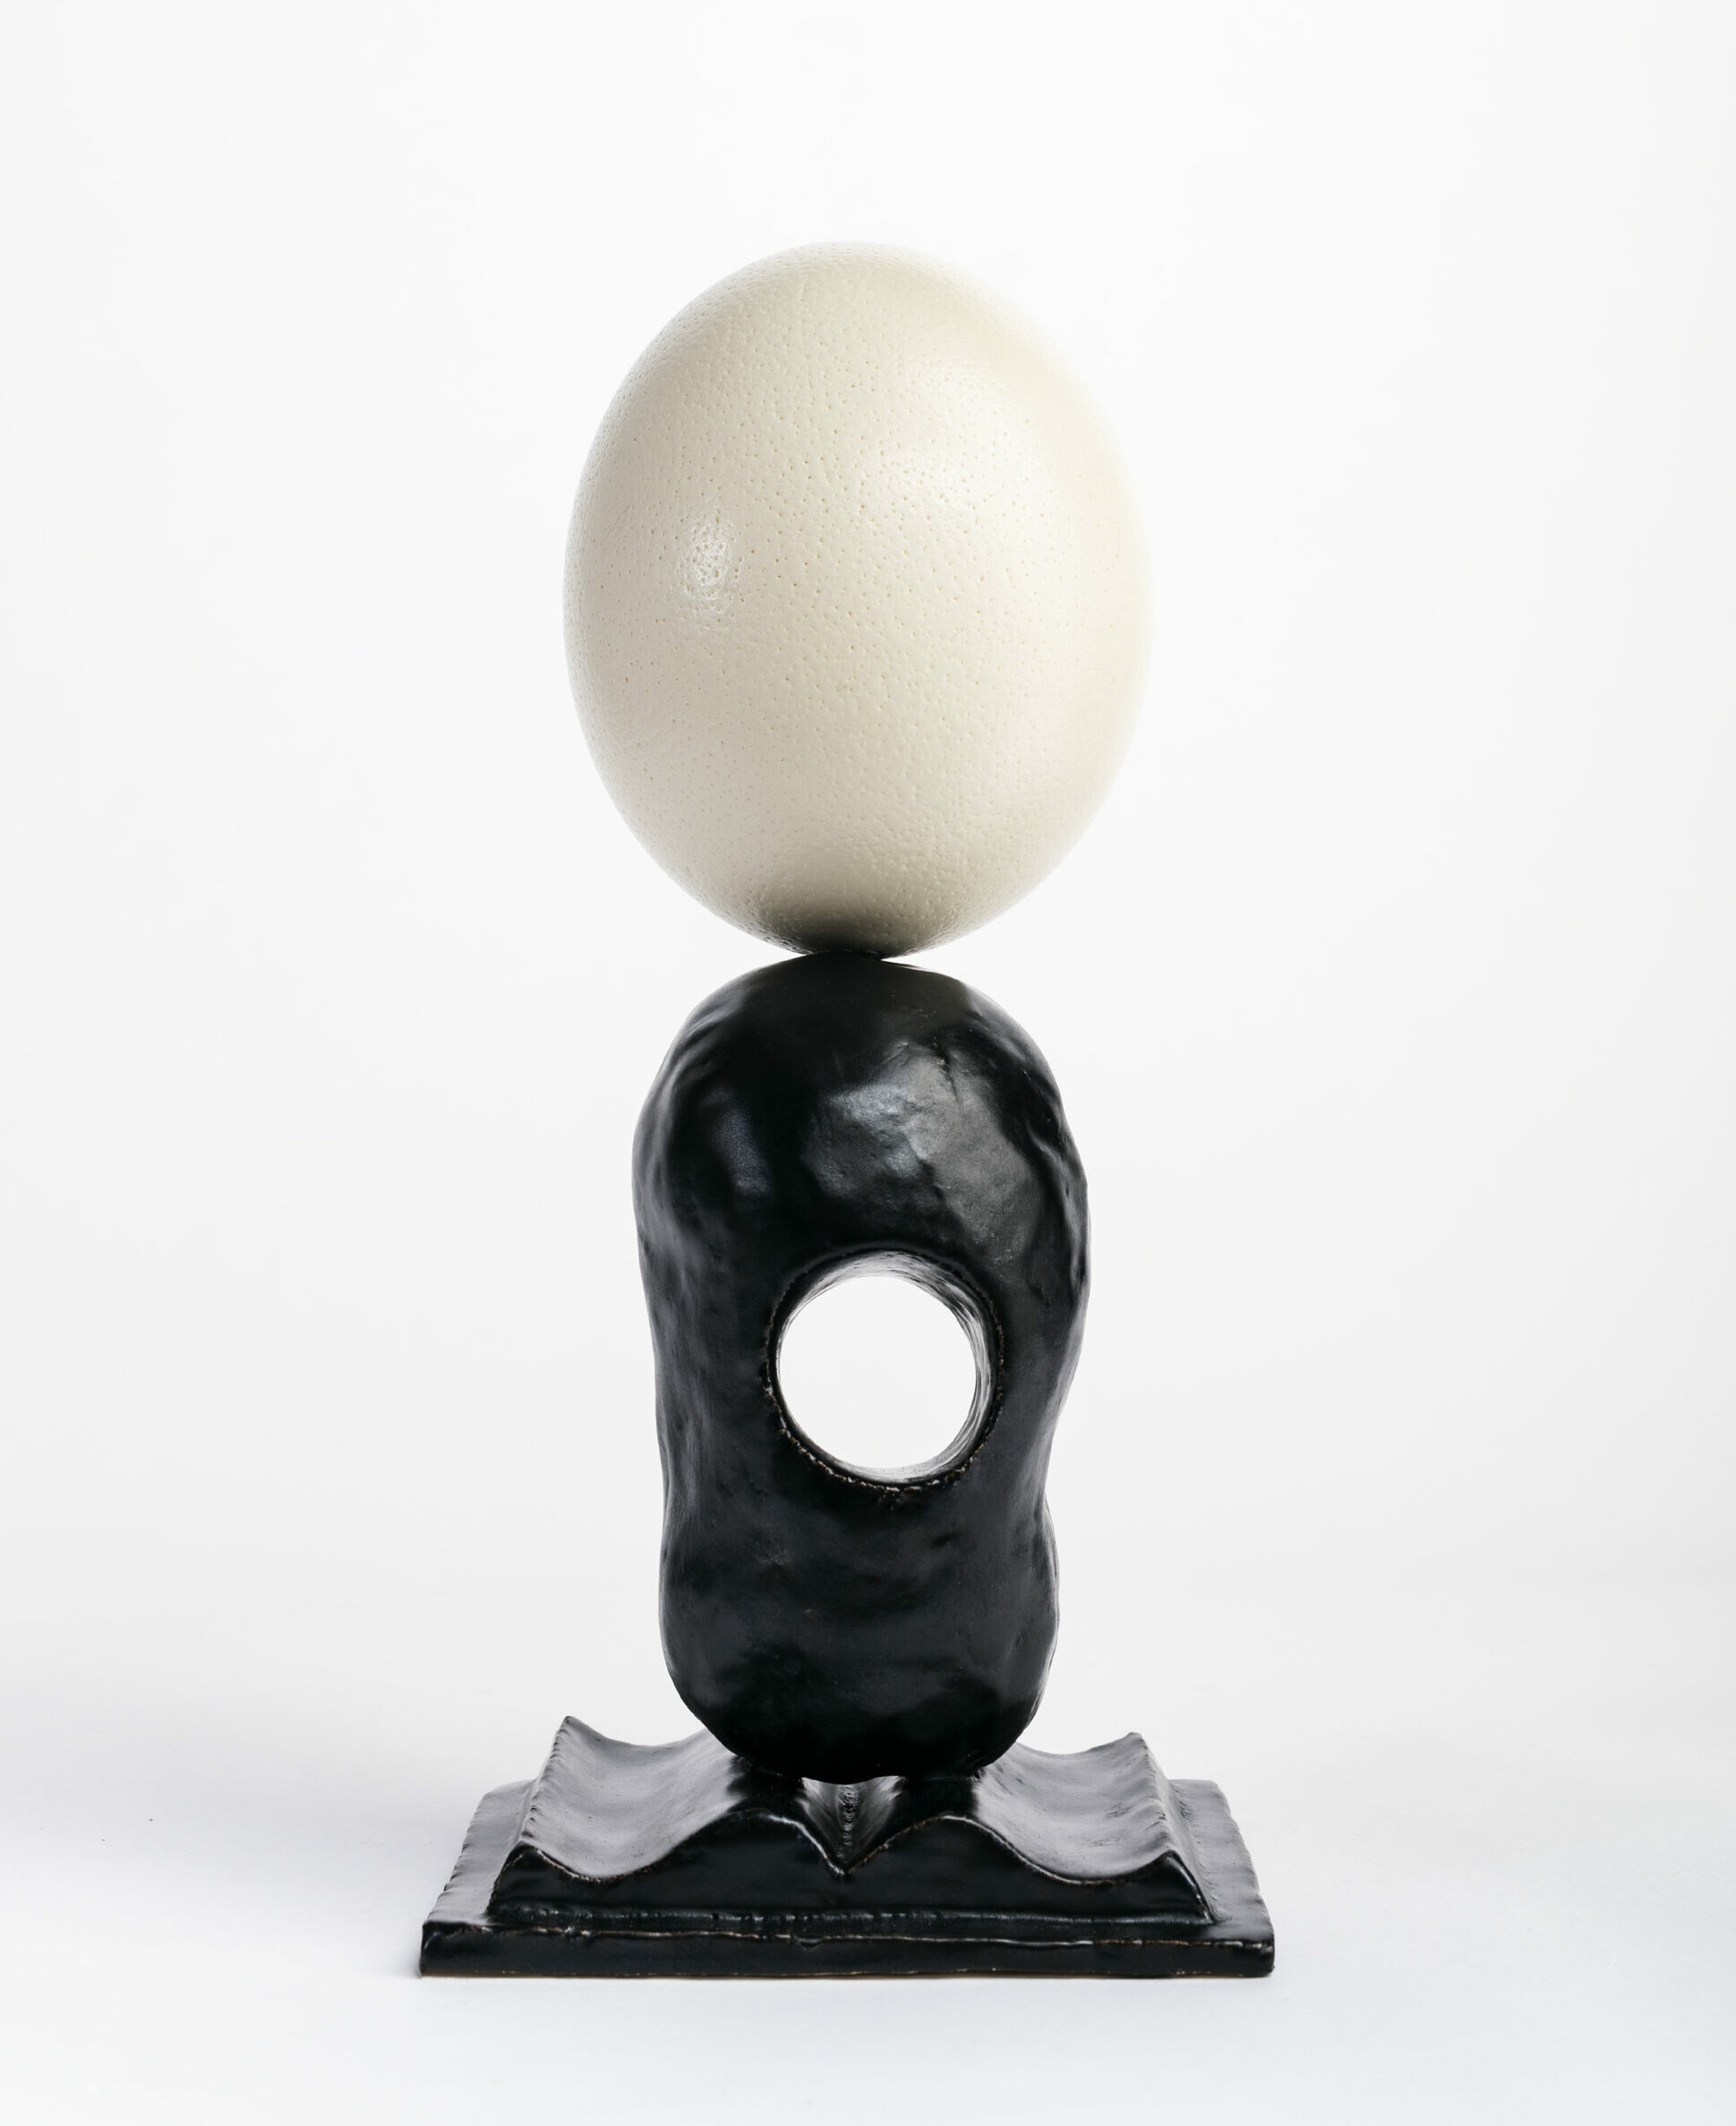 'Seid ihr mit? (III)'
2021
Keramik, Straußenei
ceramics, ostrich egg
0,16 x 0,14 x 0,34 m.